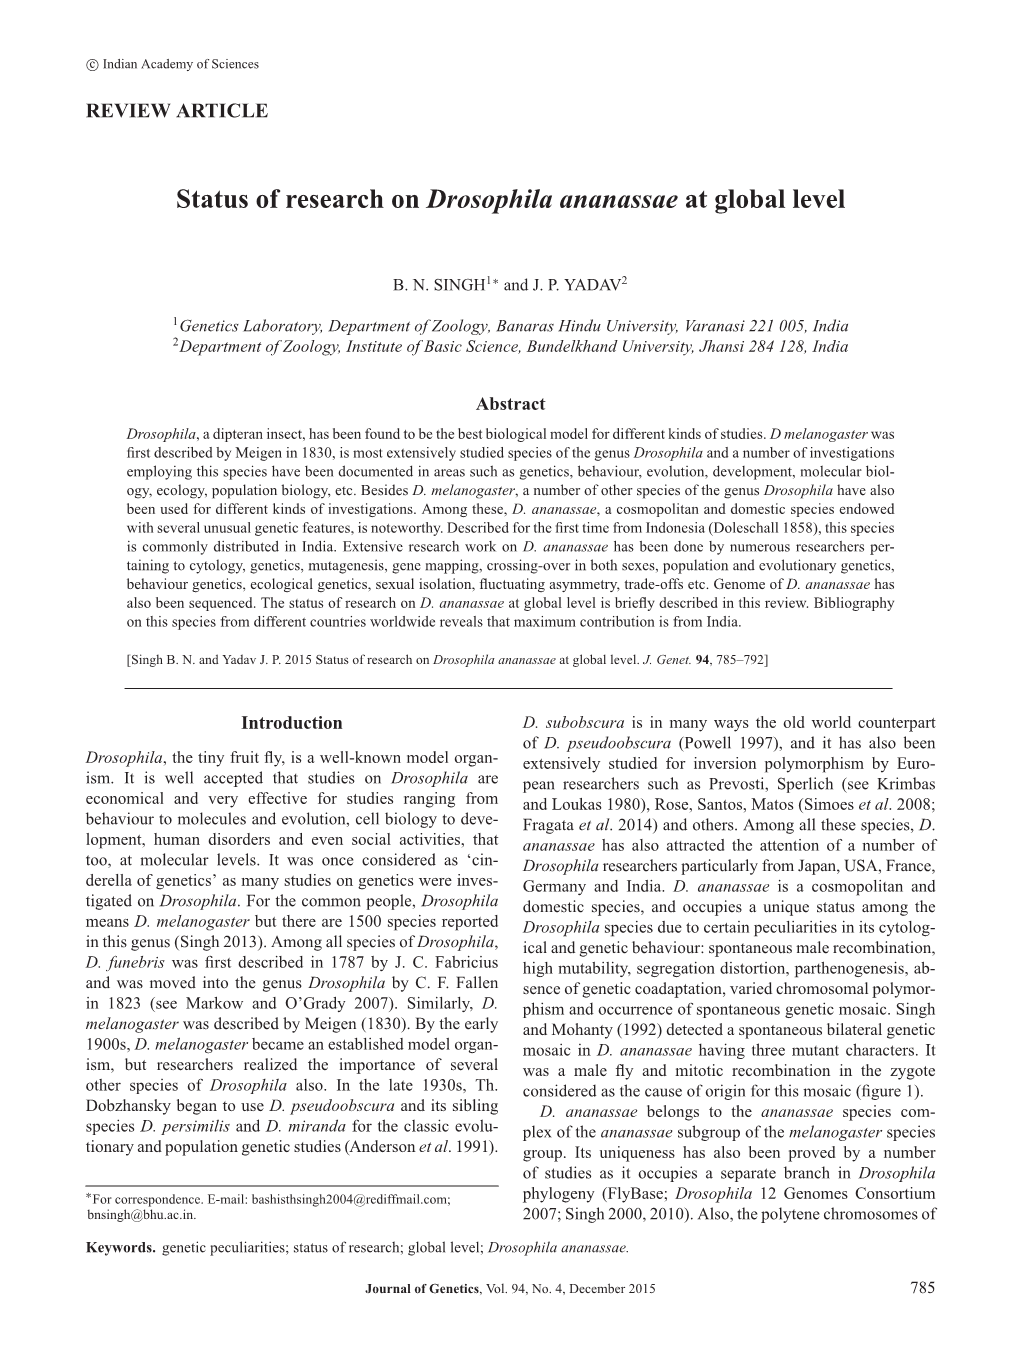 Status of Research on Drosophila Ananassae at Global Level